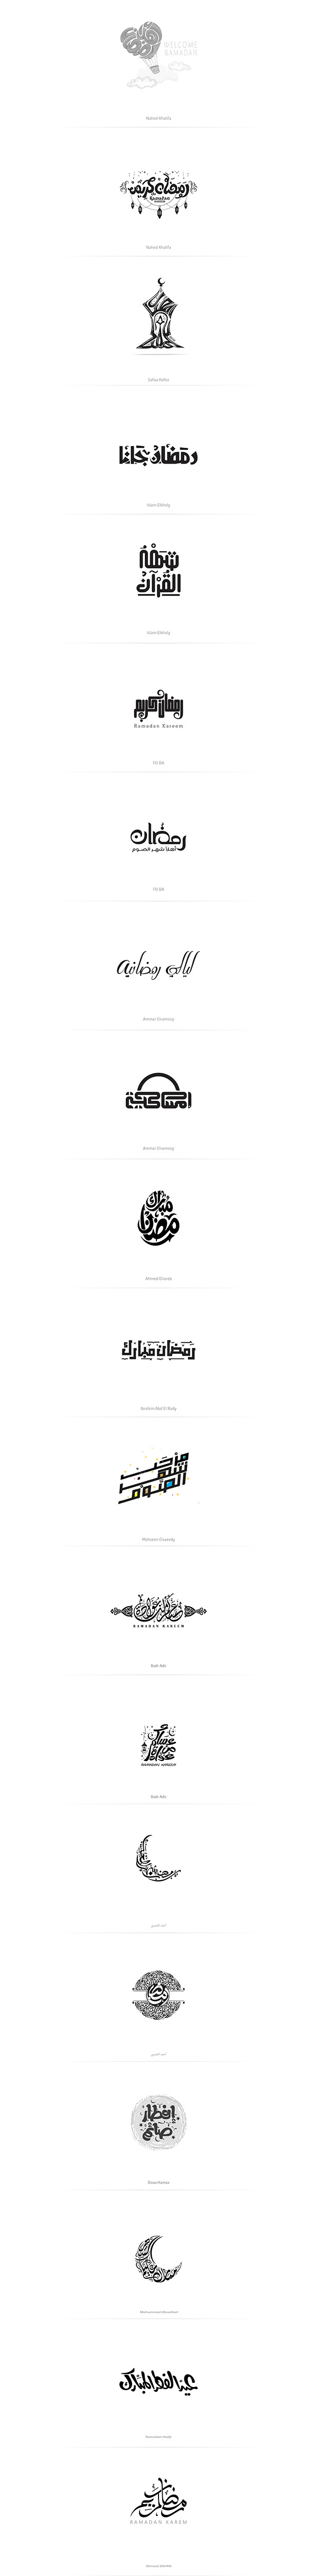 Free Ramadan kareem| Typography 2018